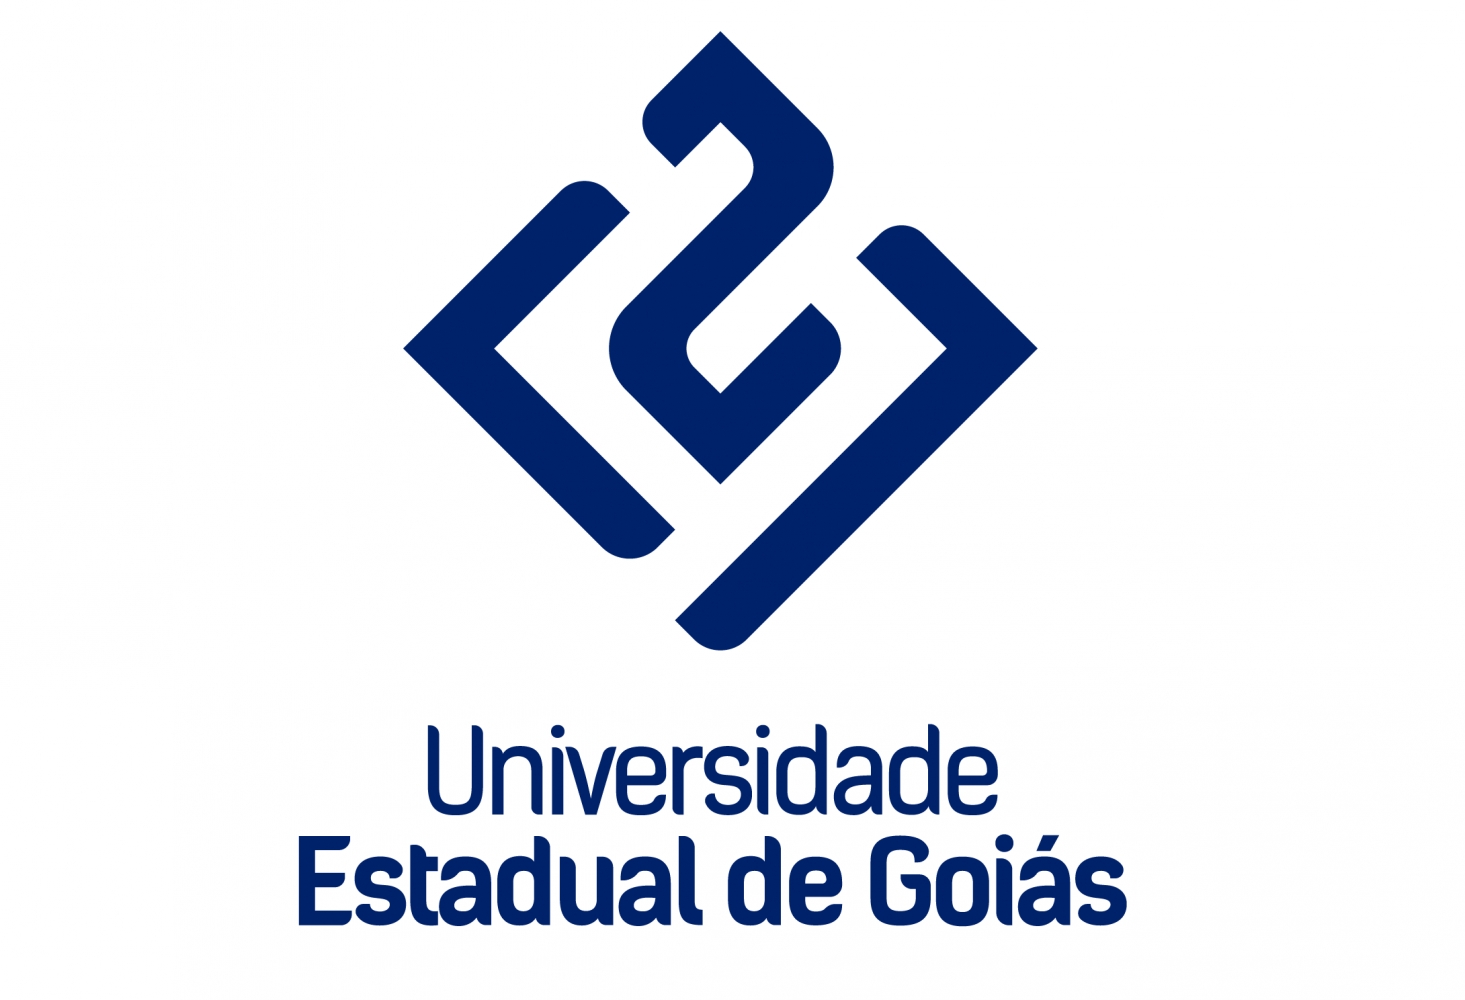 Universidade Estadual de Gois